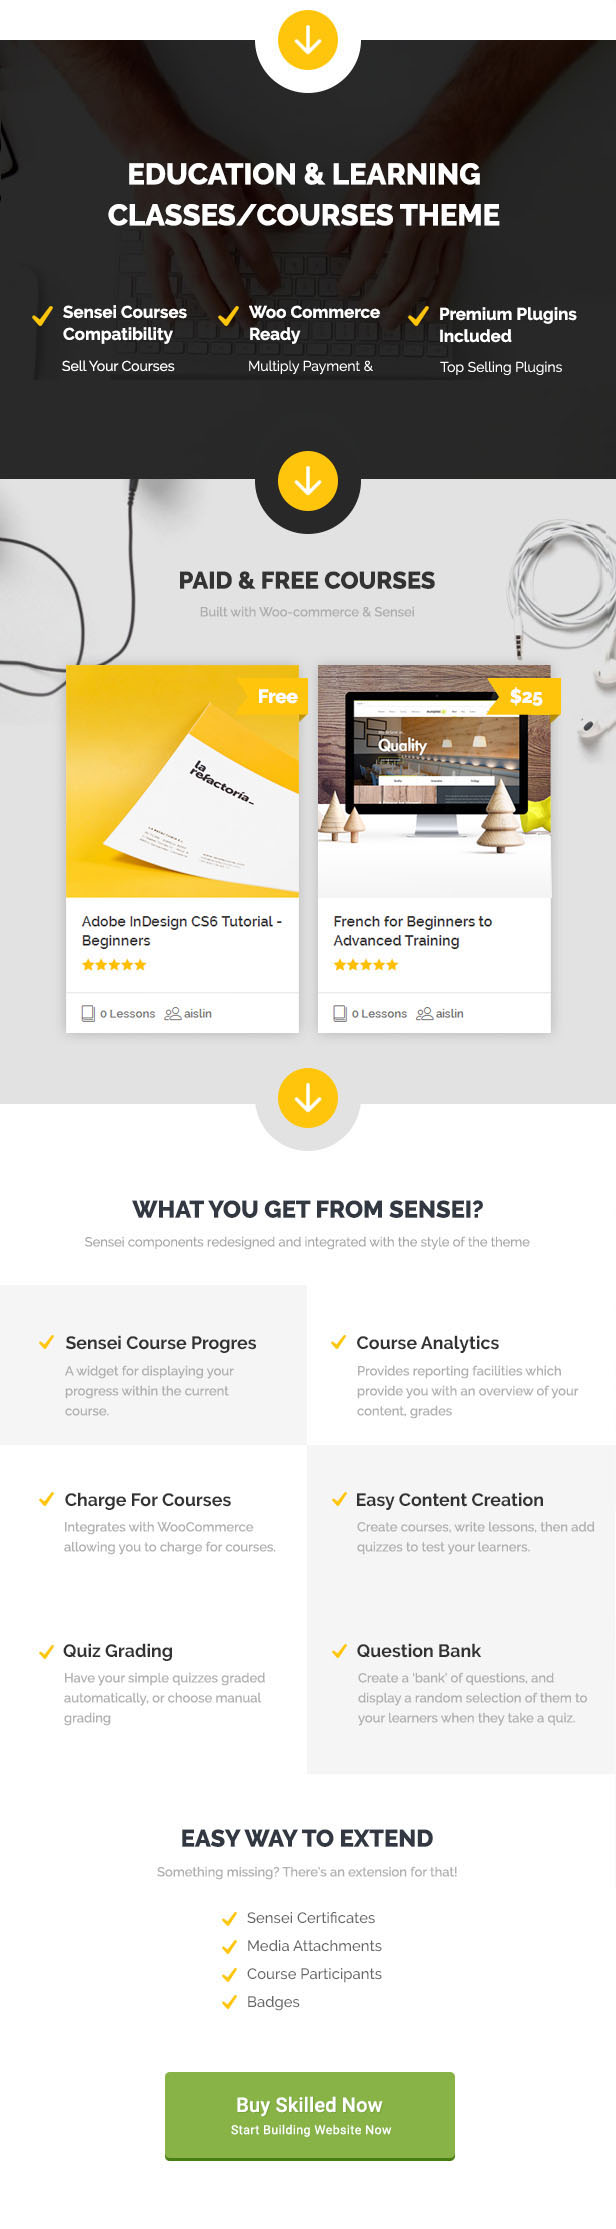 Skilled | School Education Courses WordPress Theme - 2